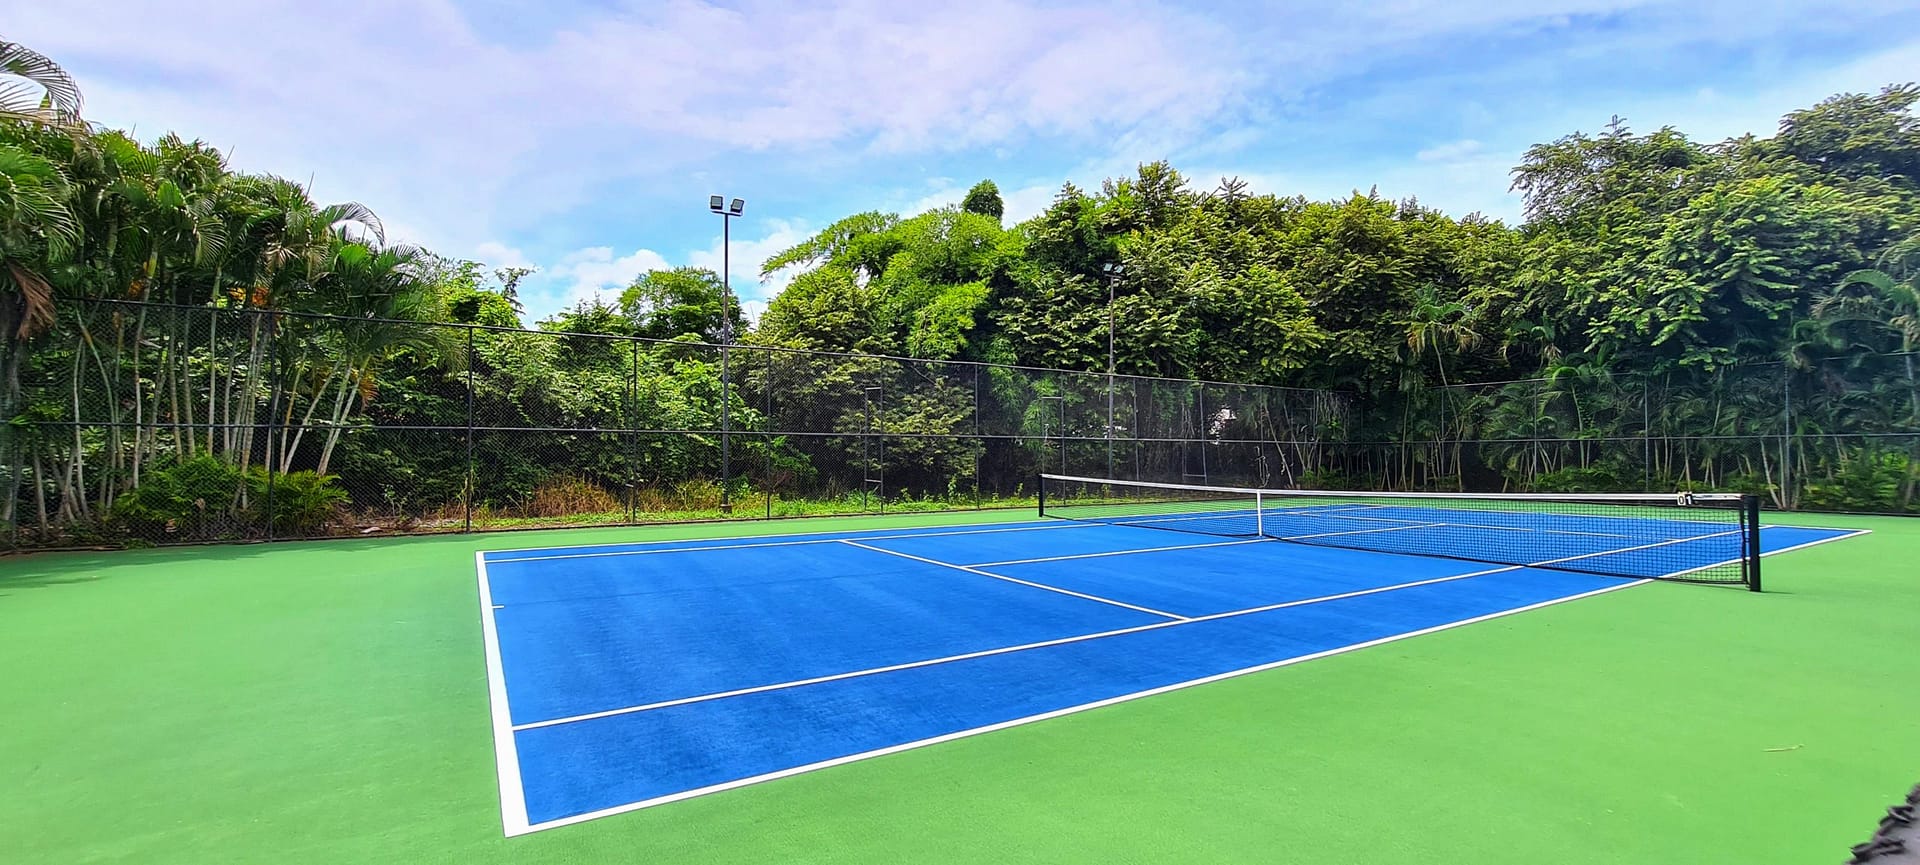 Coco Bay Estates Tenis Courts